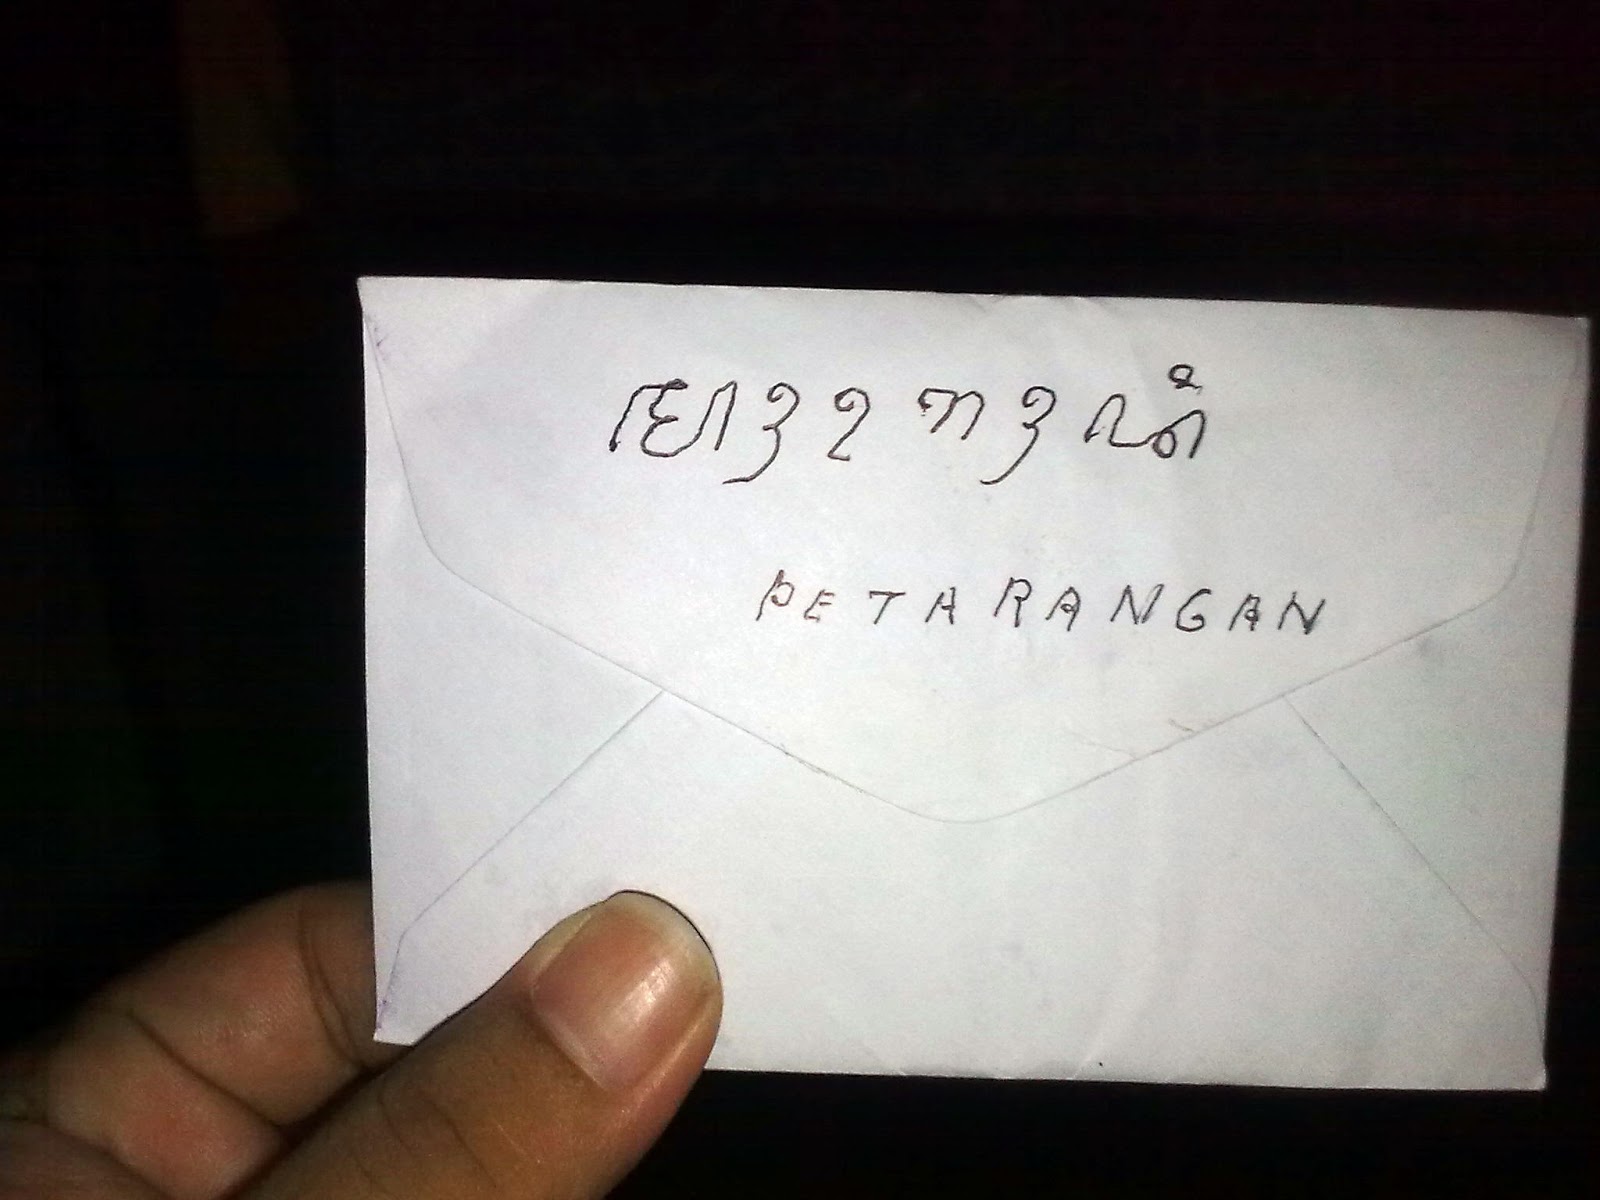 Melihat amplop ini saya mengingat waktu kecil saya di suruh simbah untuk mengirimkan surat ke adik simbah yang berada di lampung pulau sumatra nan jauh